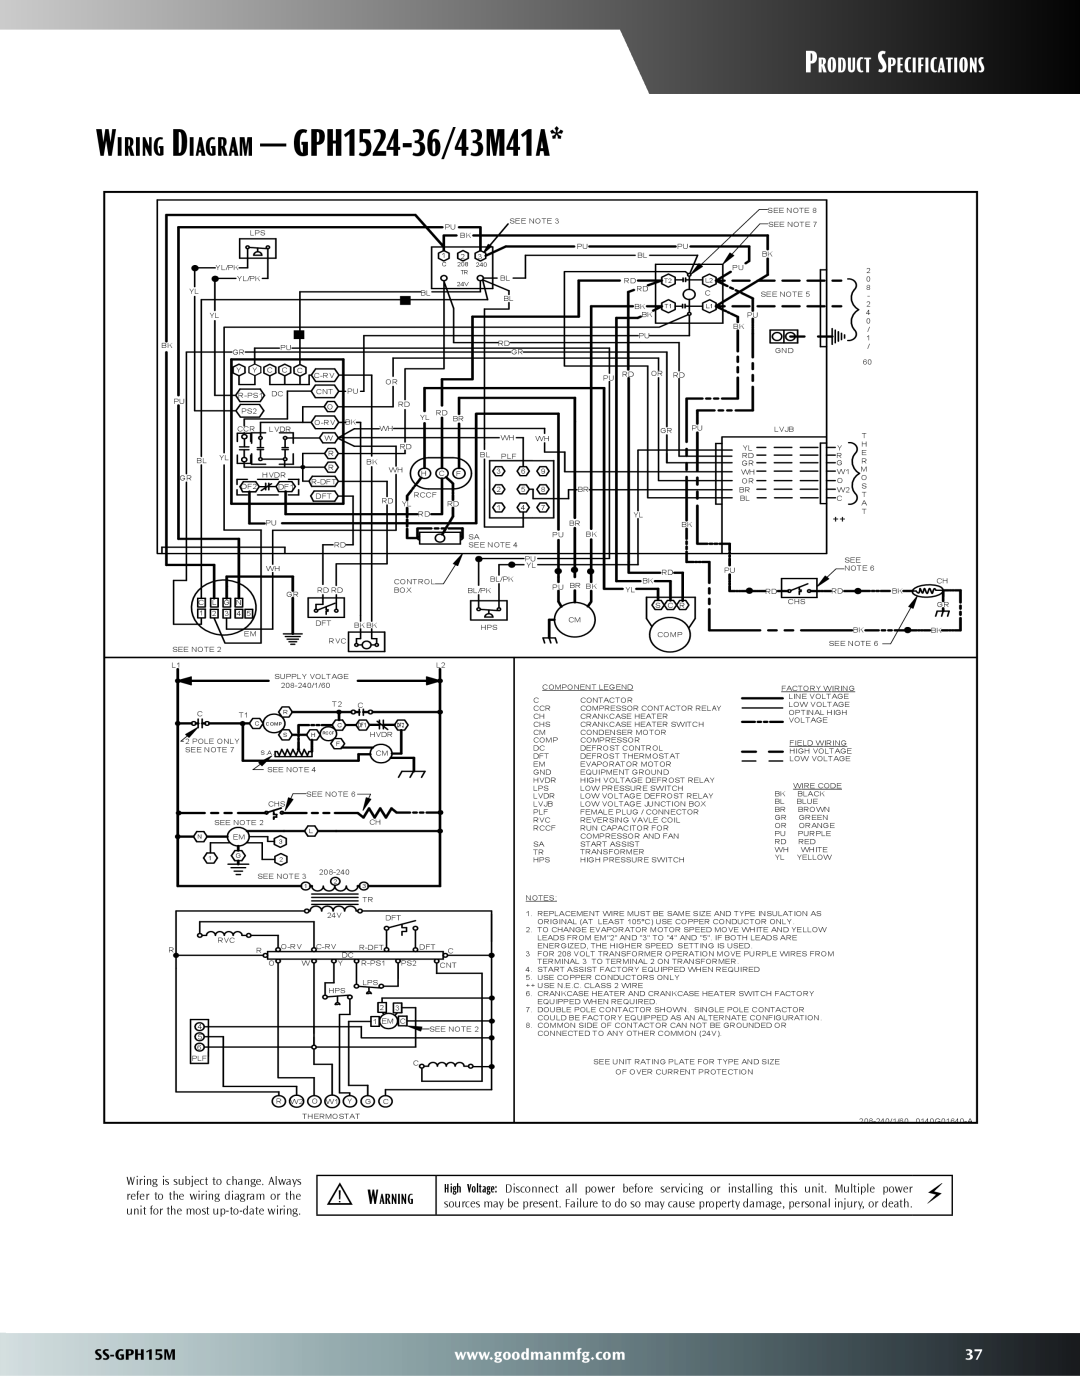 Goodman Mfg warranty Wiring Diagram — GPH1524-36/43M41A, Product Specifications, SS-GPH15M 